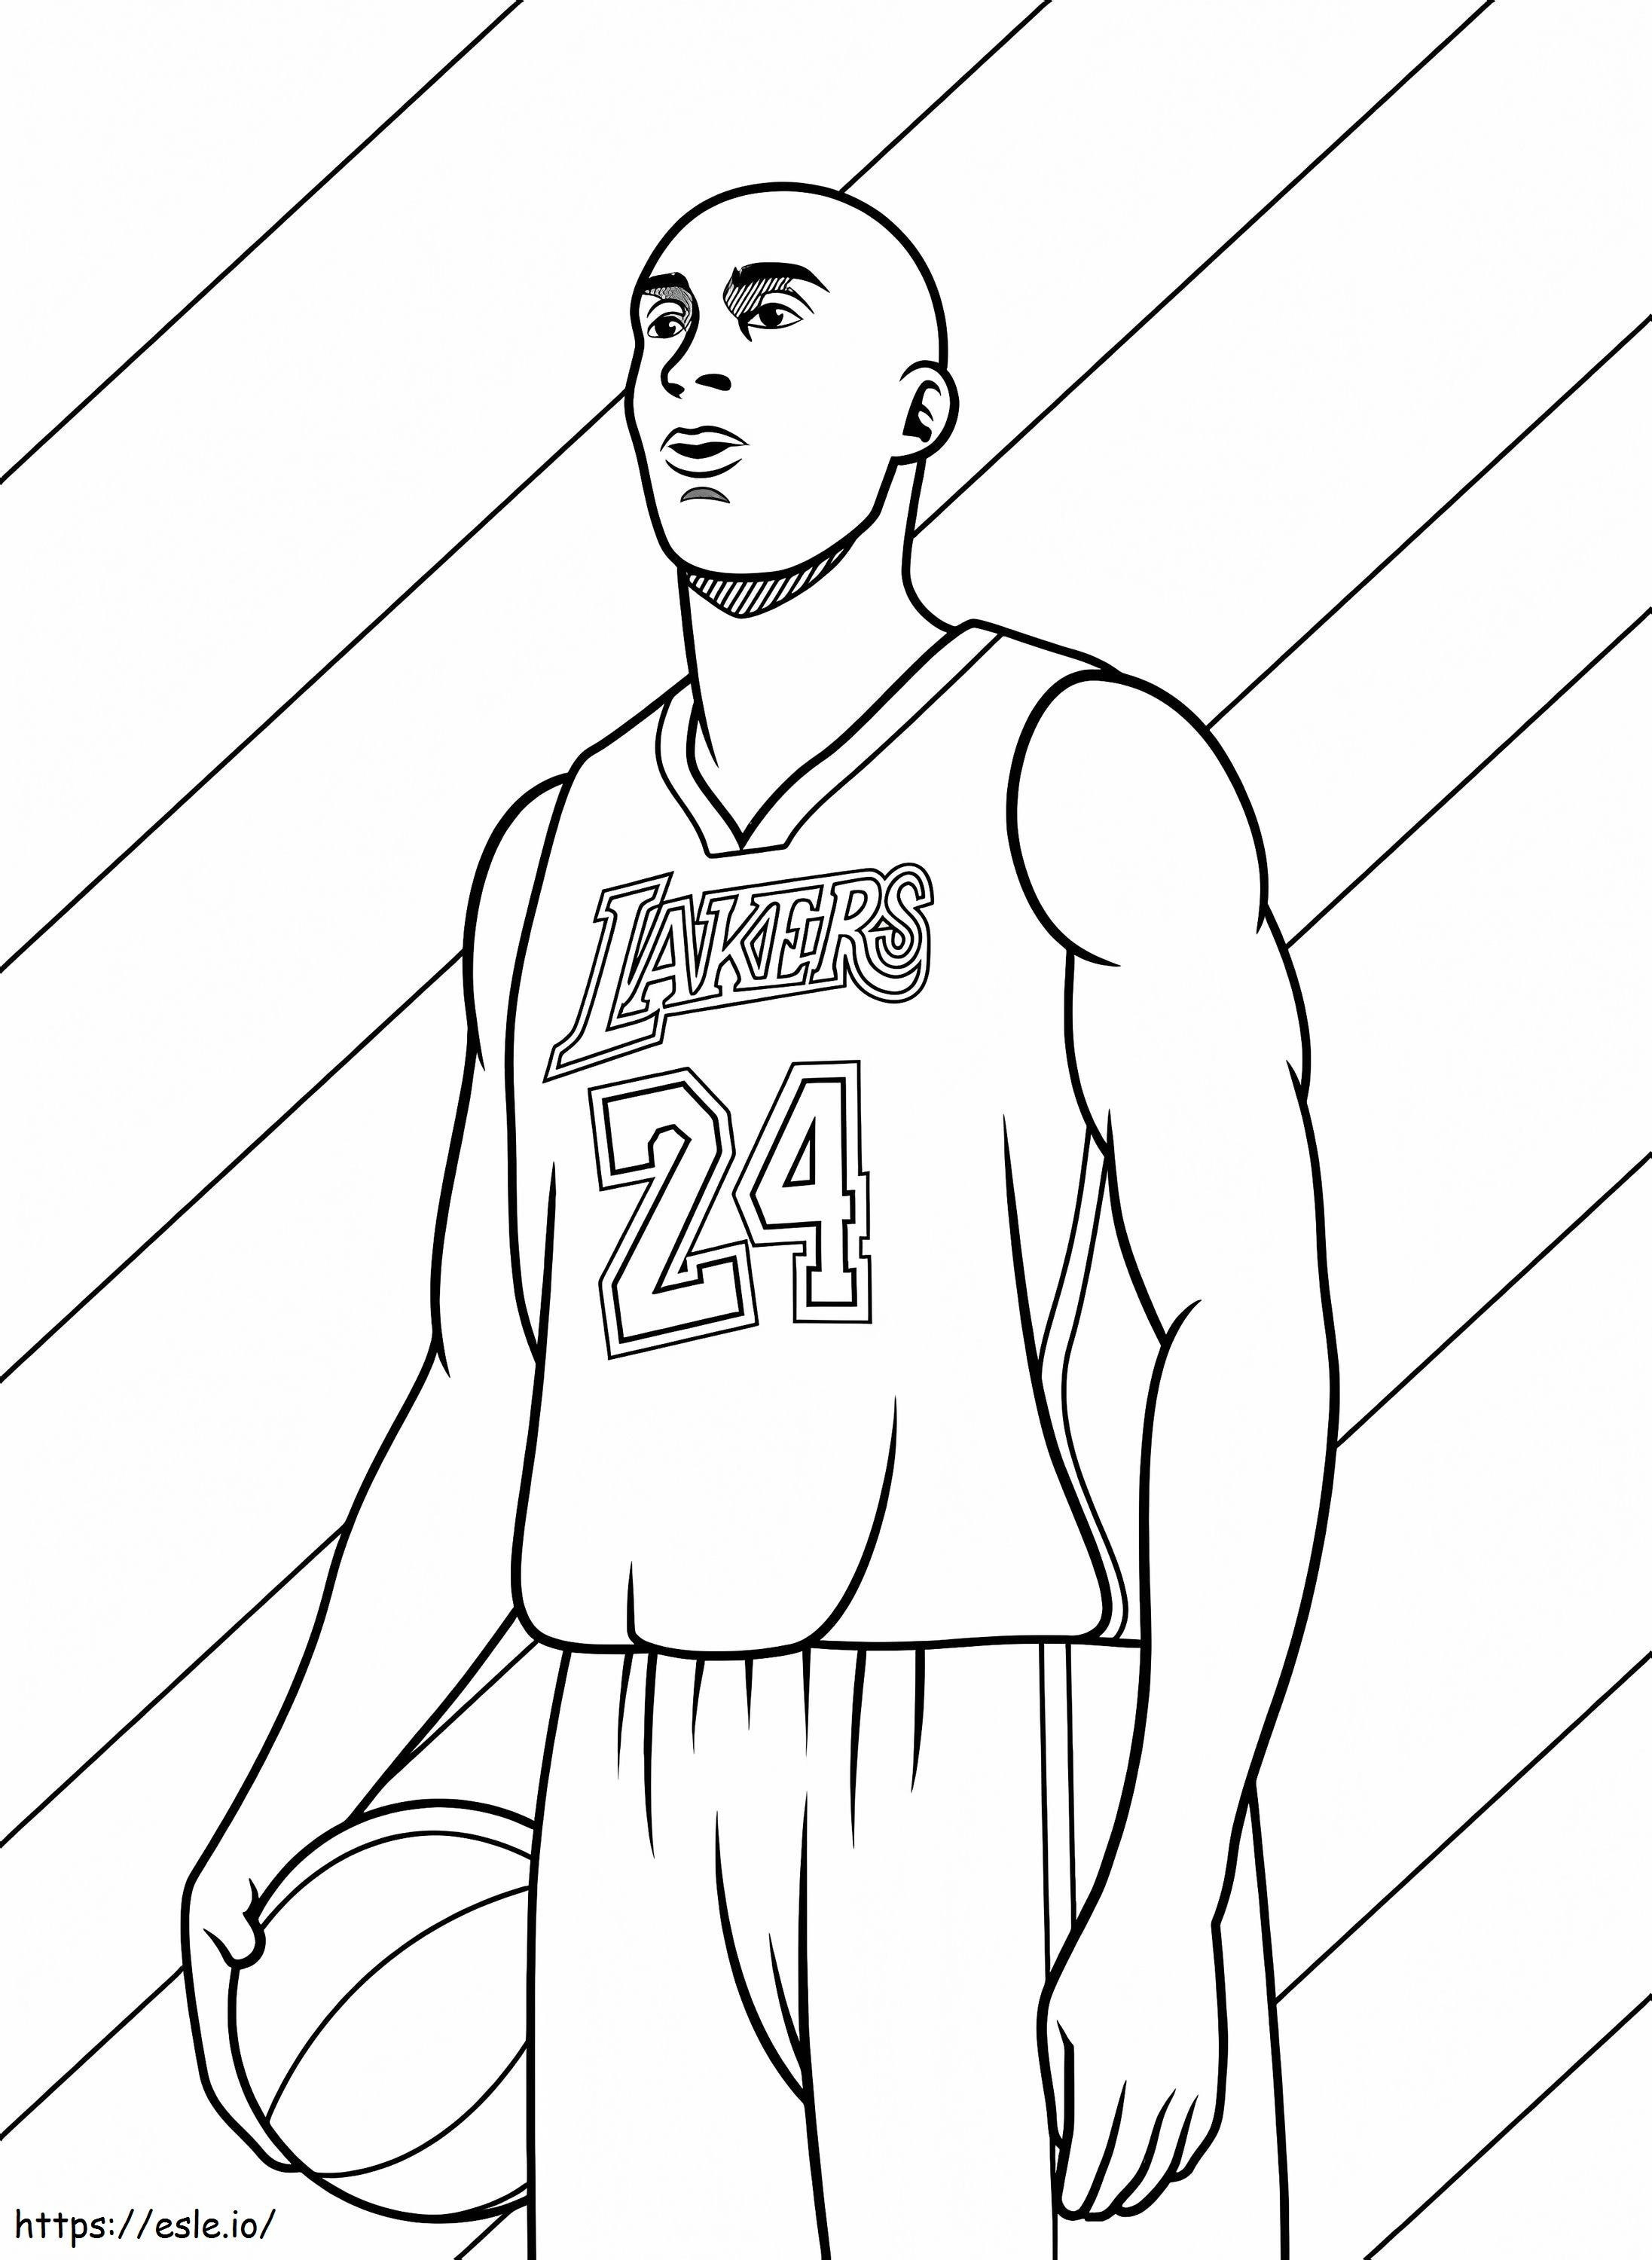 Kobe Bryant imprimible para colorear